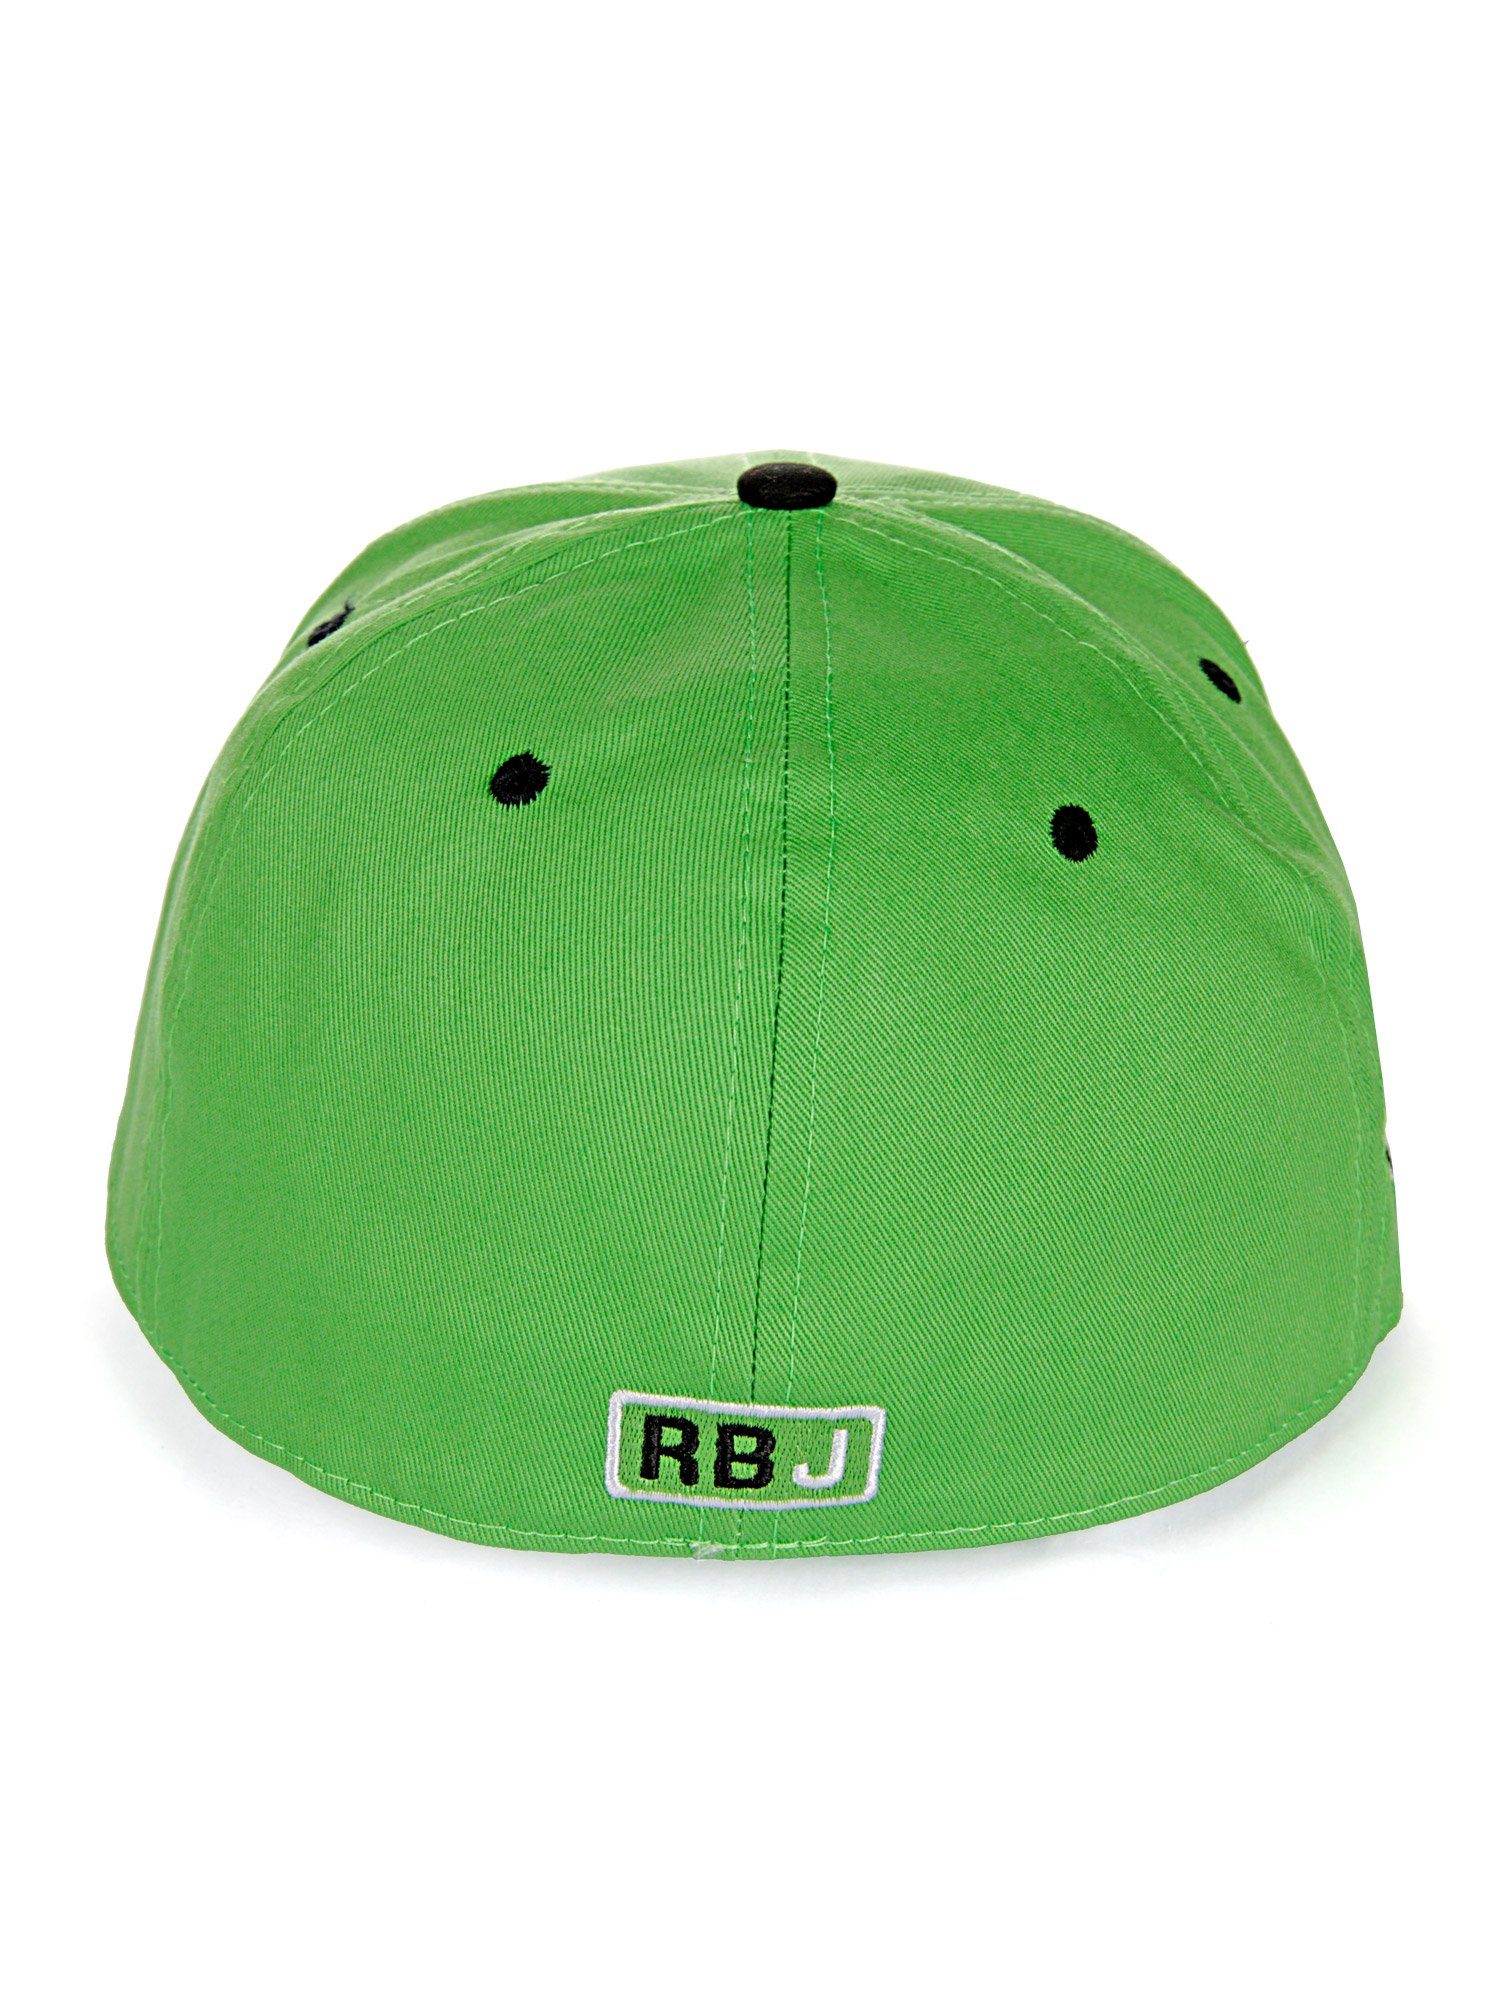 RedBridge Schirm Baseball Durham grün-schwarz Cap kontrastfarbigem mit